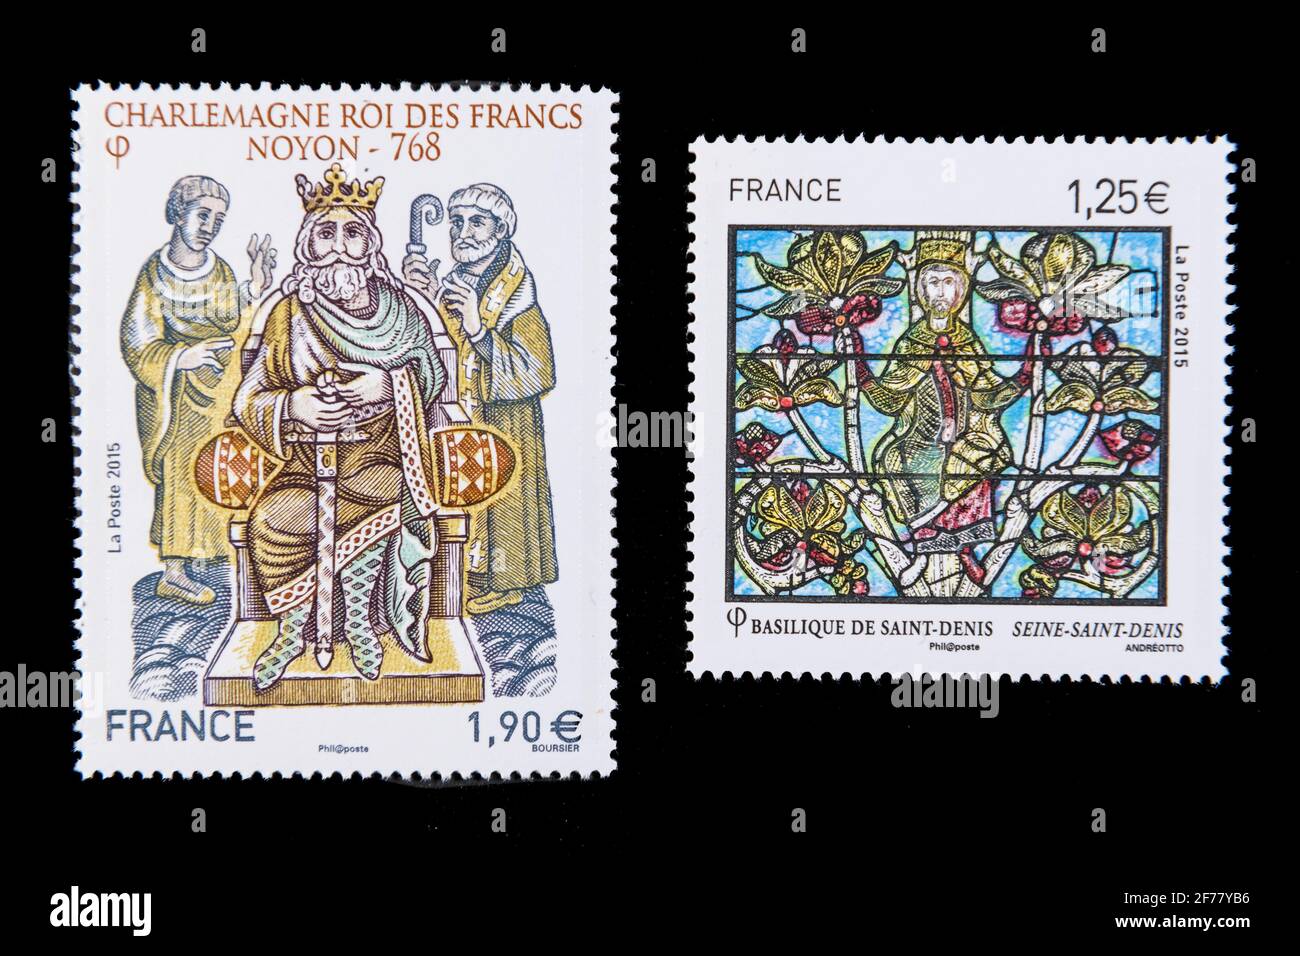 France, Paris, stamps Stock Photo